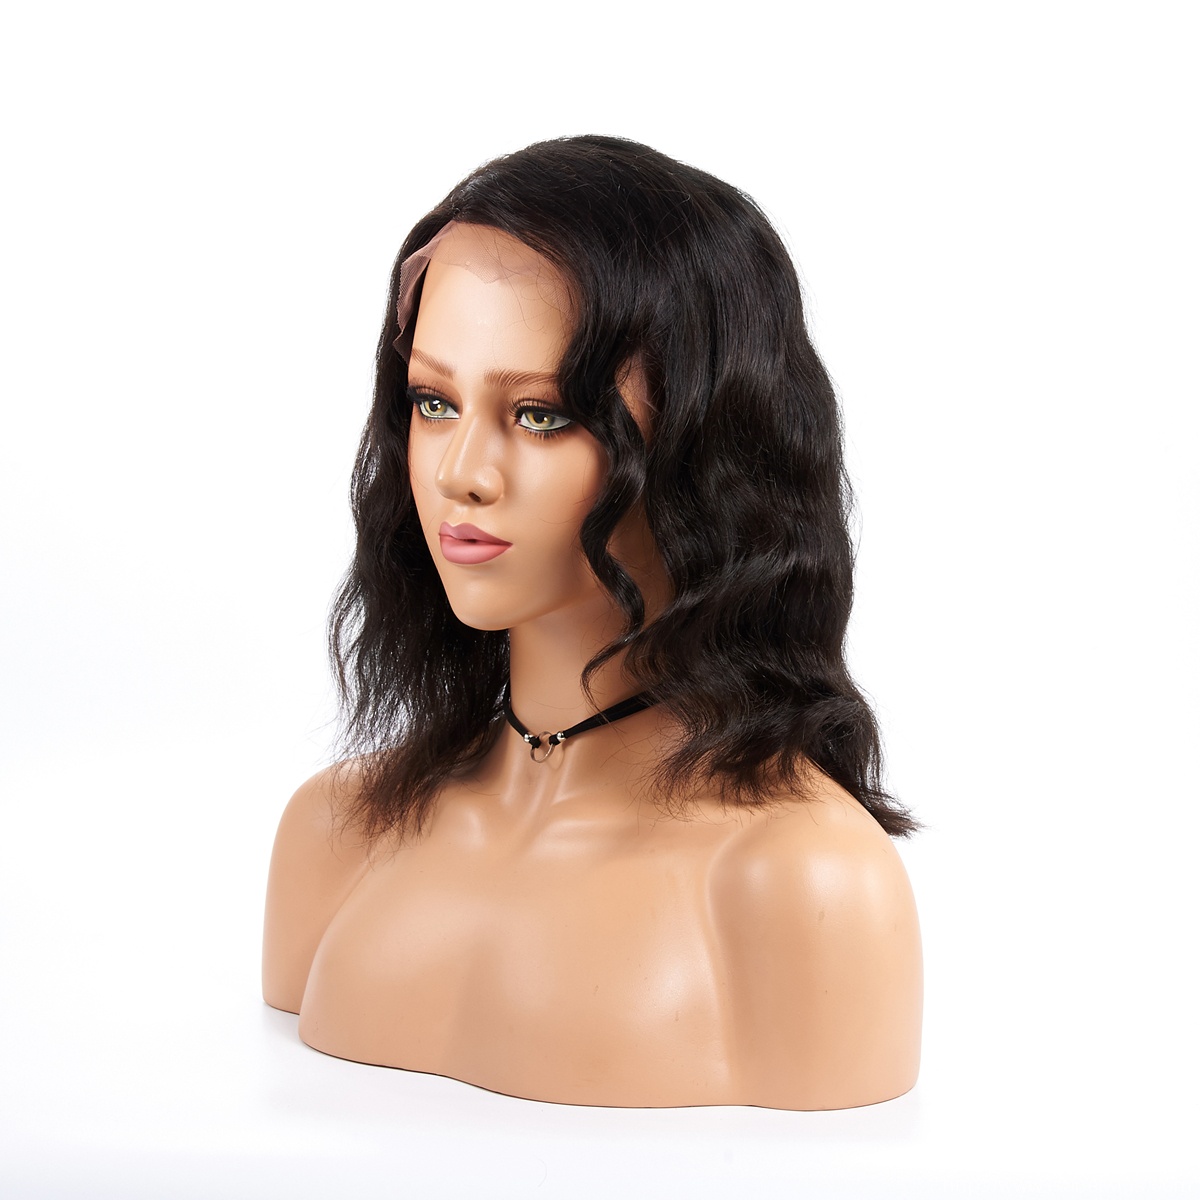 New Hot Wavy Human Hair Wigs Brazilian Virgin Hair 130% Density Short Bob Lace Front Wigs For Black Women